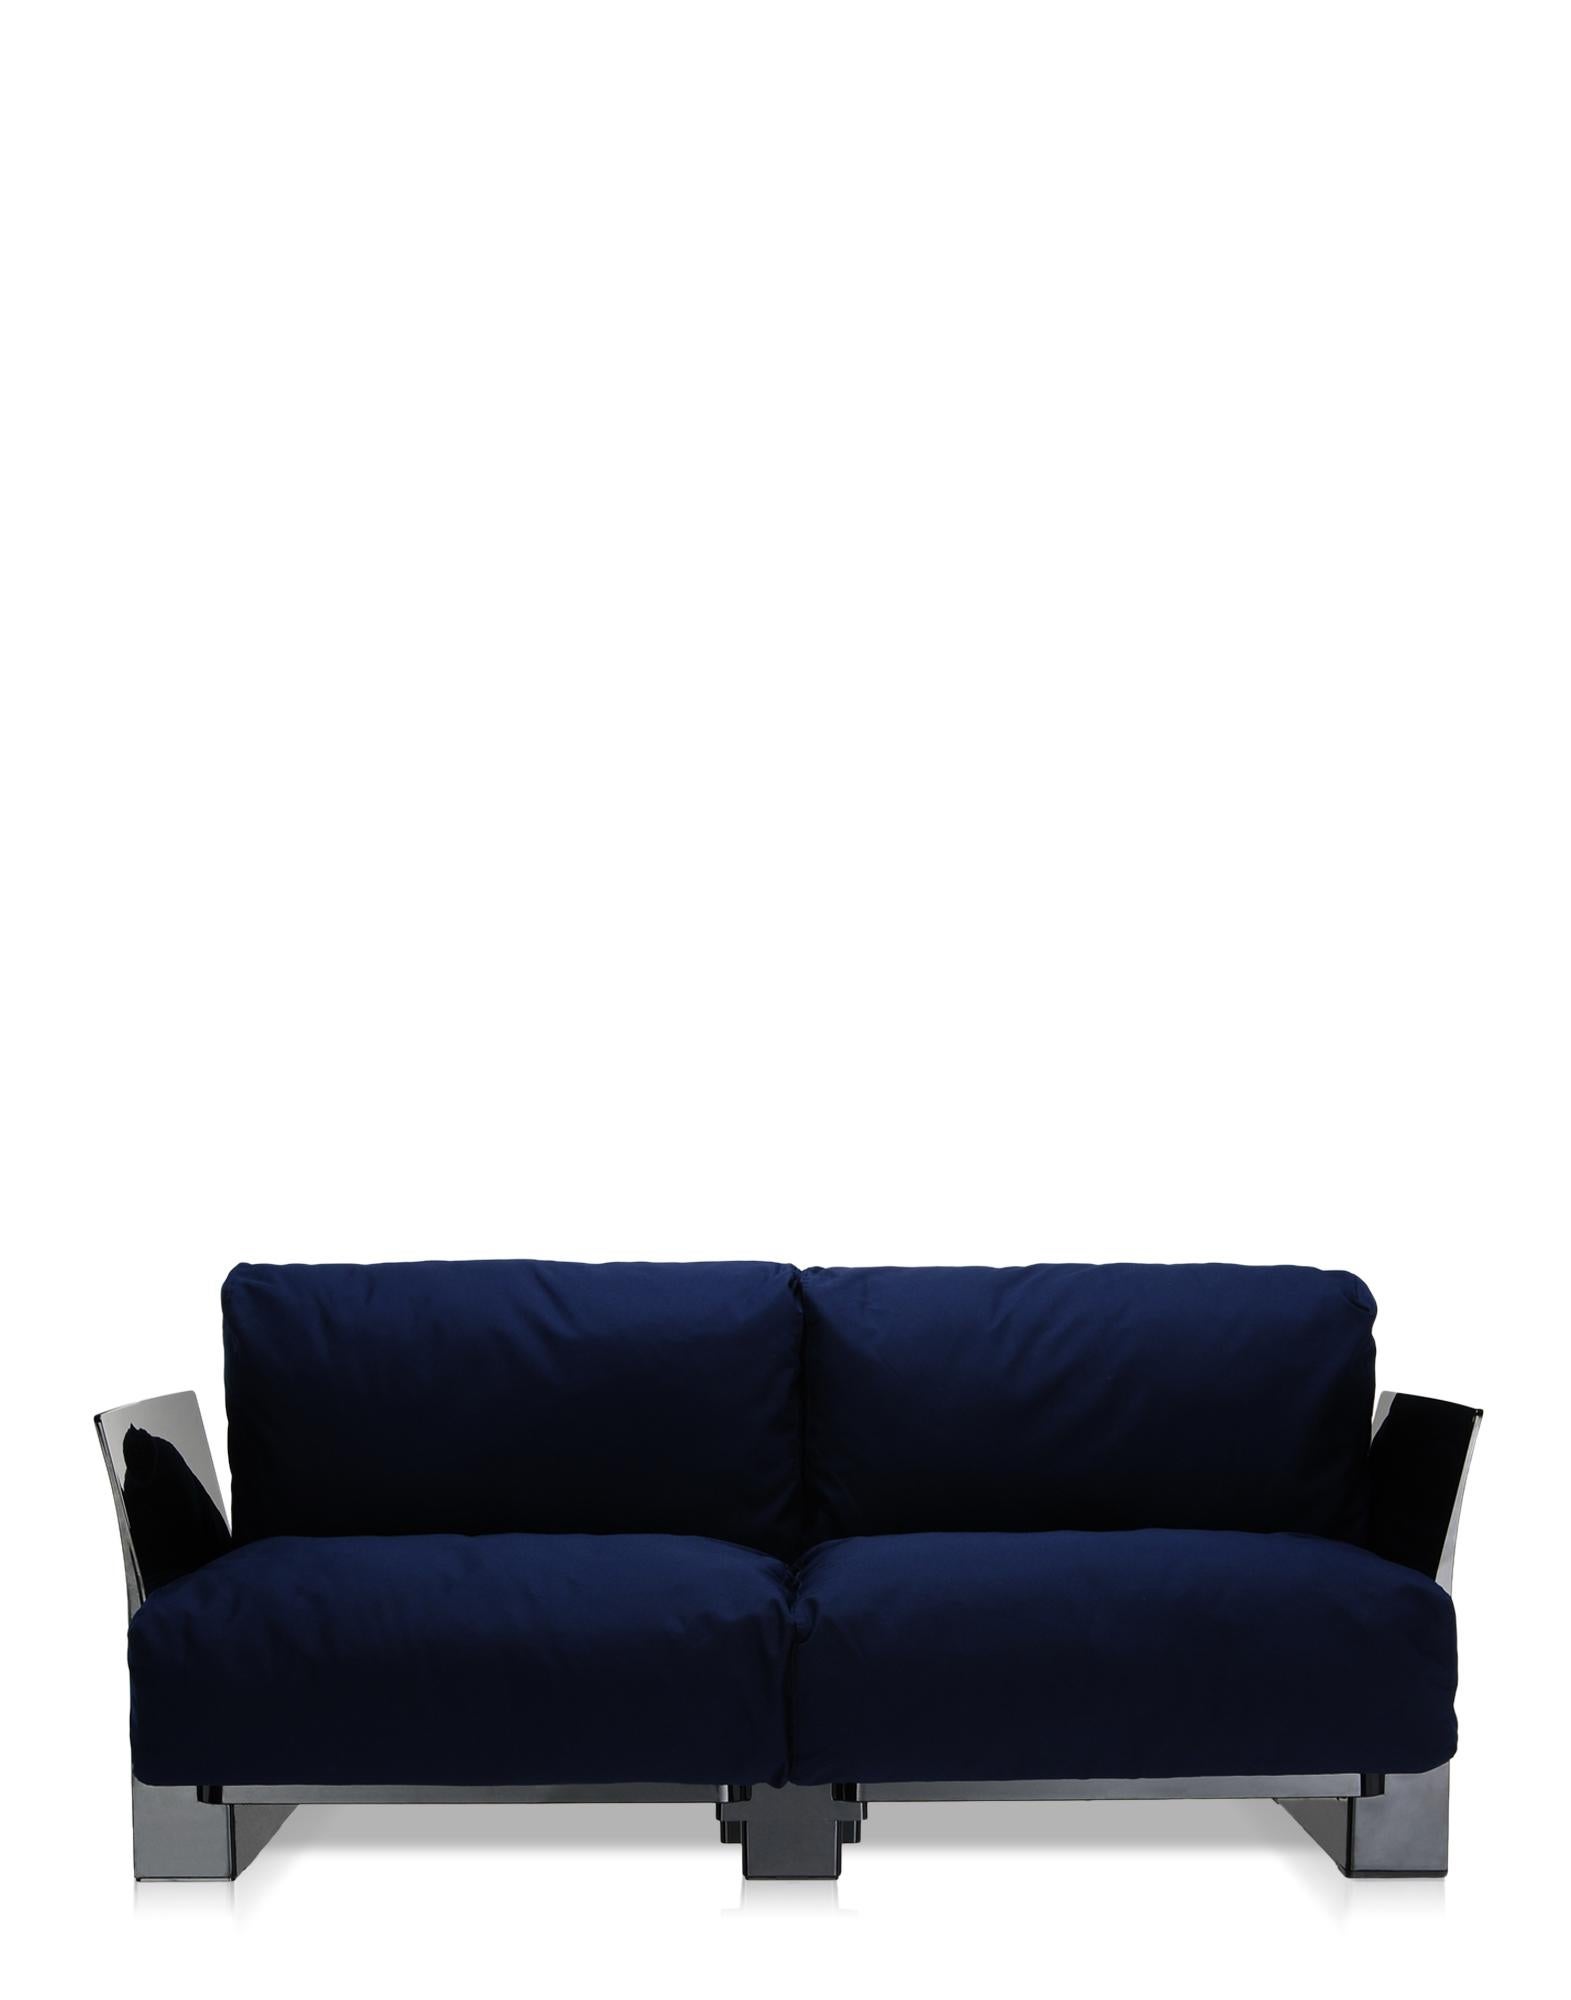 Italian Kartell Pop Outdoor Sofa in Sunbrella Blue by Piero Lissoni For Sale